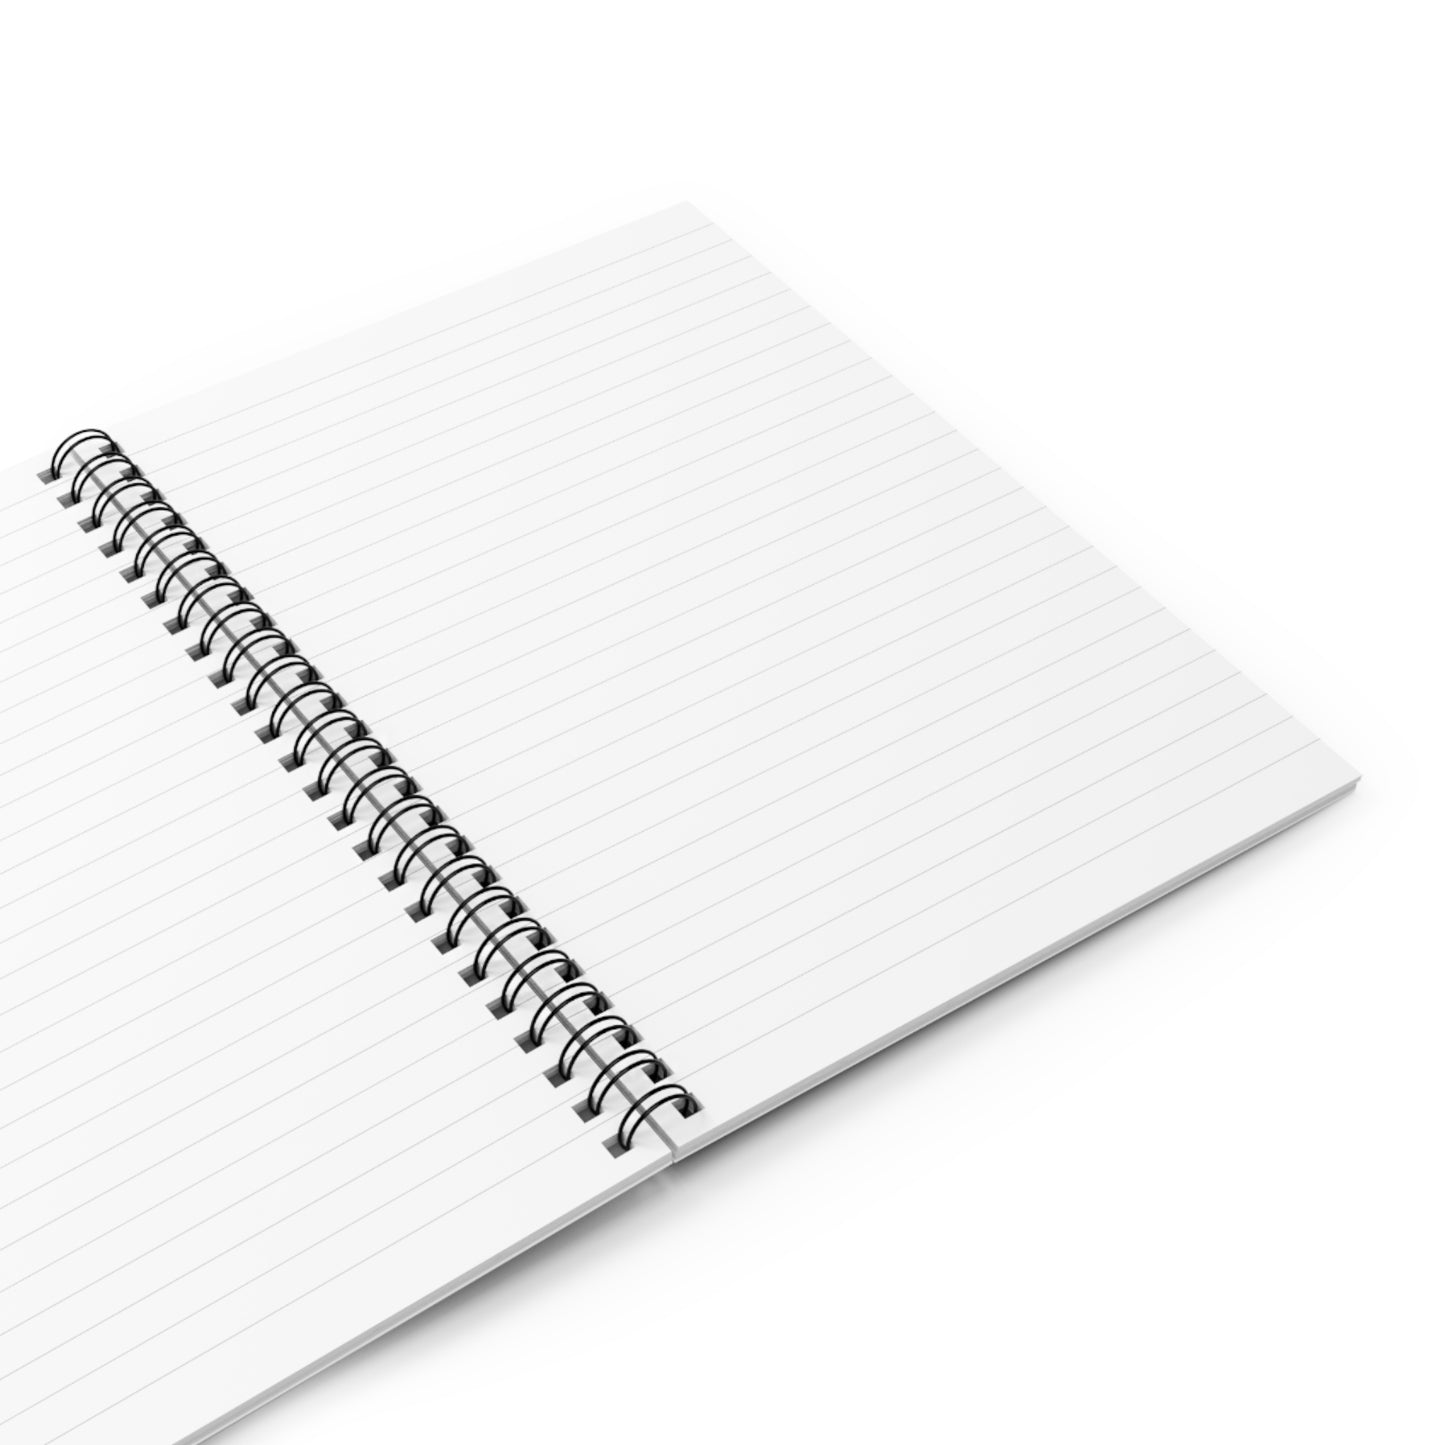 MInd is Set -  Journal Notebook